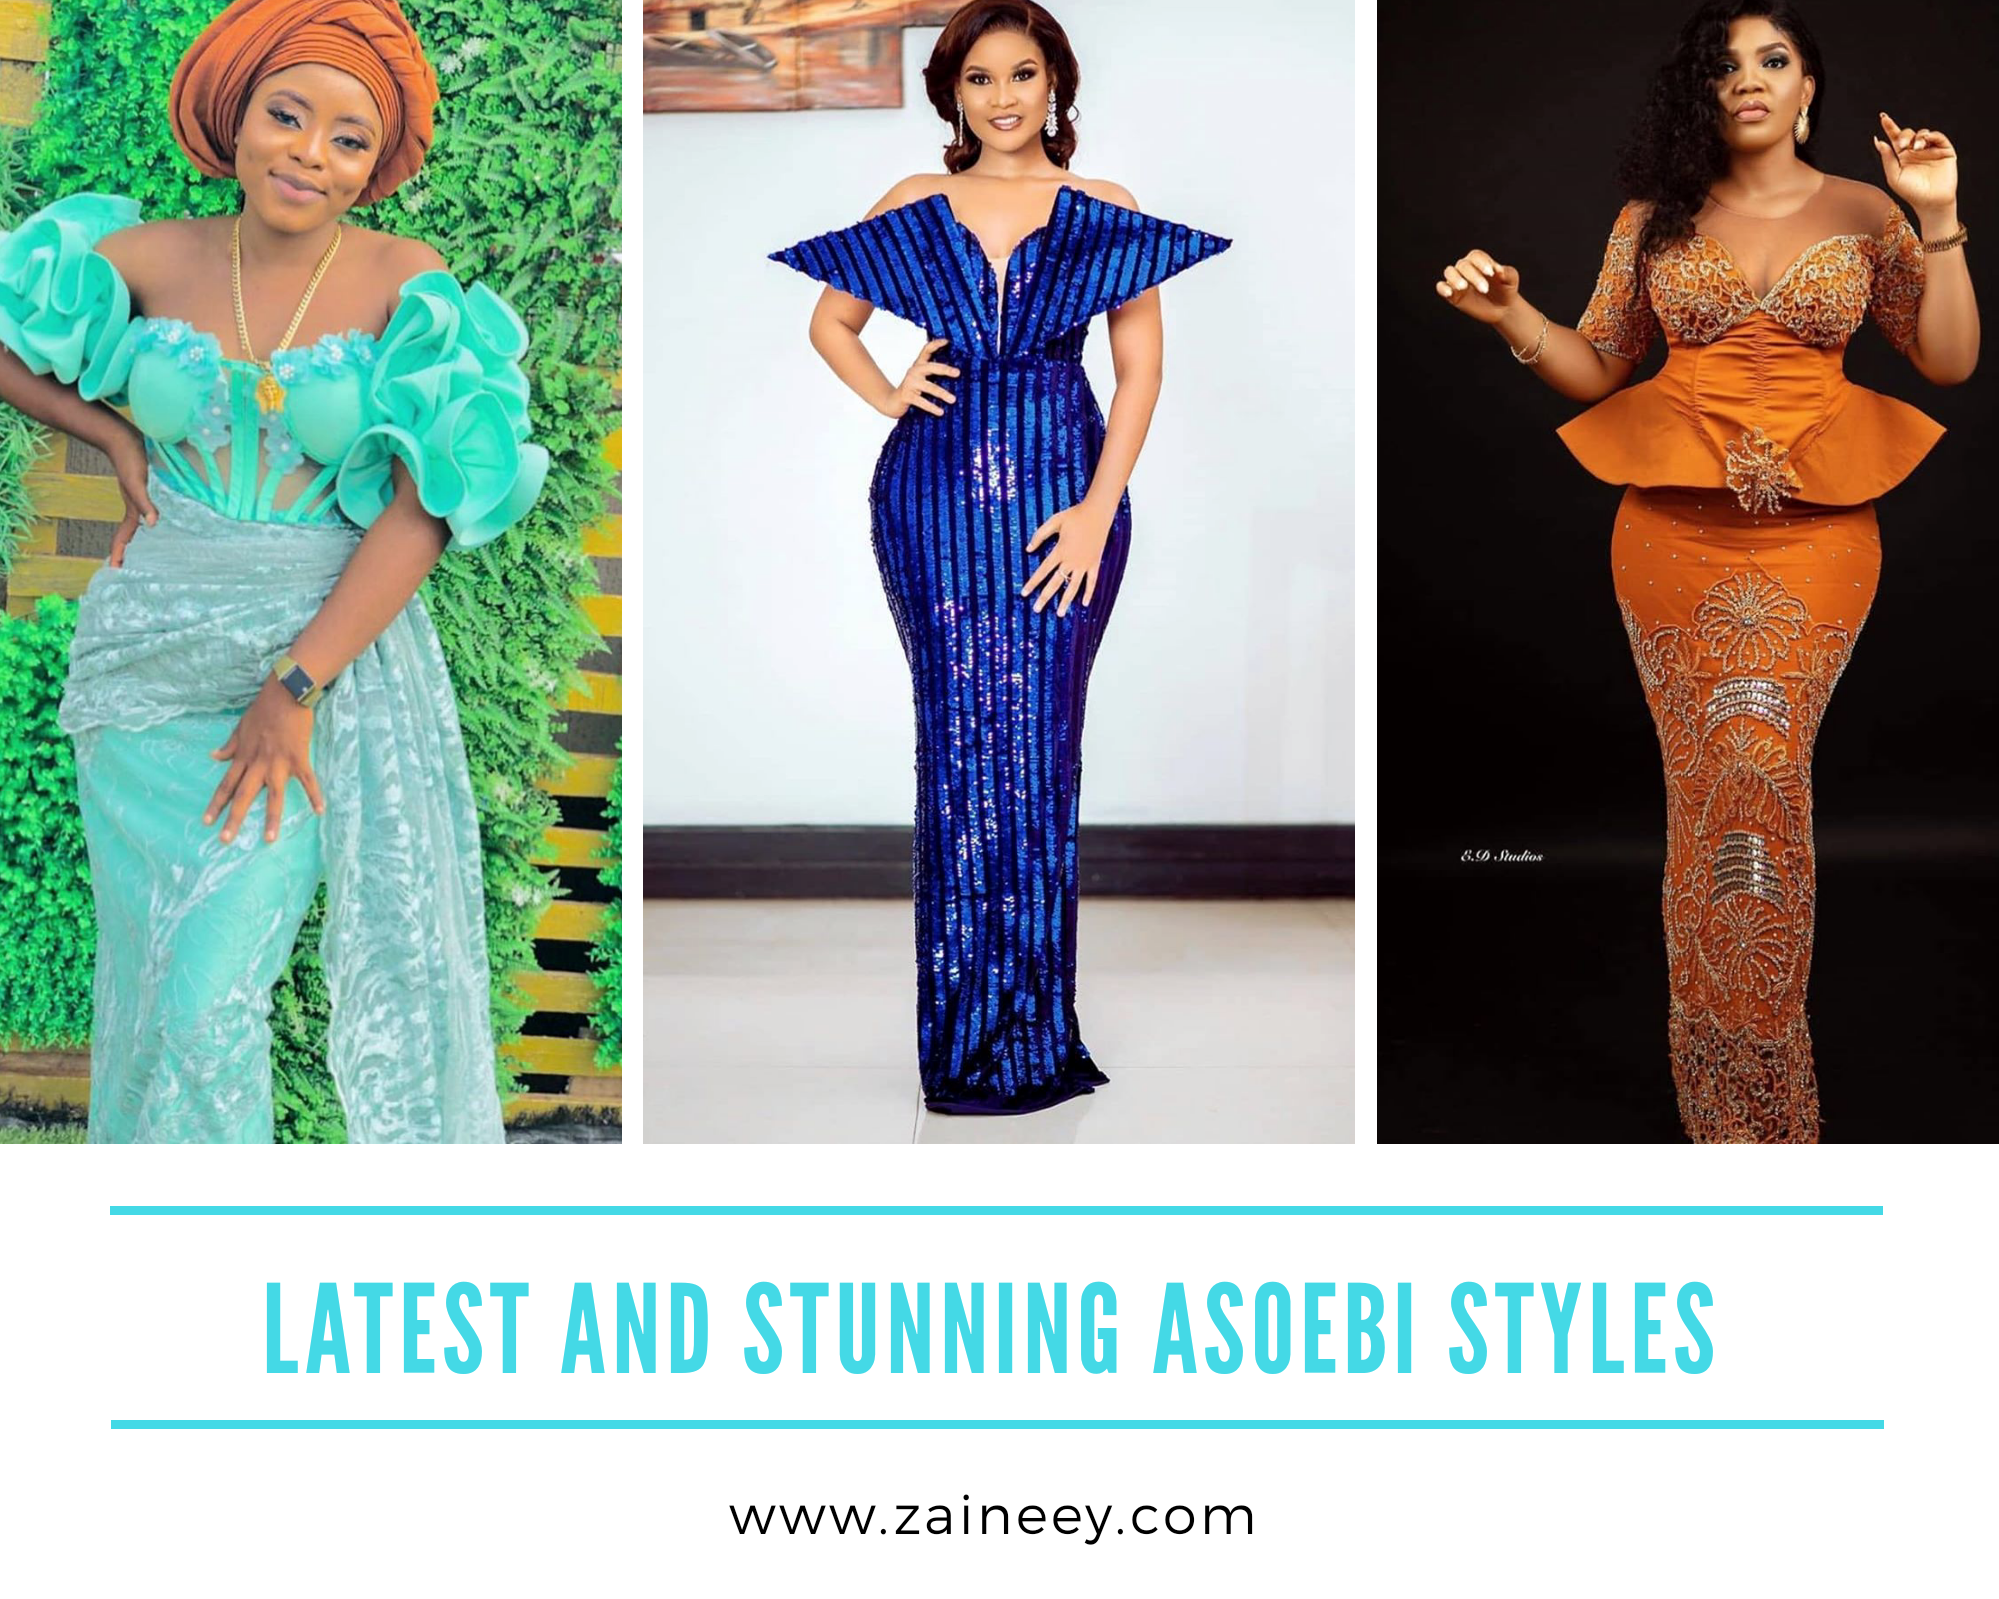 African Asoebi Style 2020: Latest and Stunning Asoebi Styles for fashionable Ladies